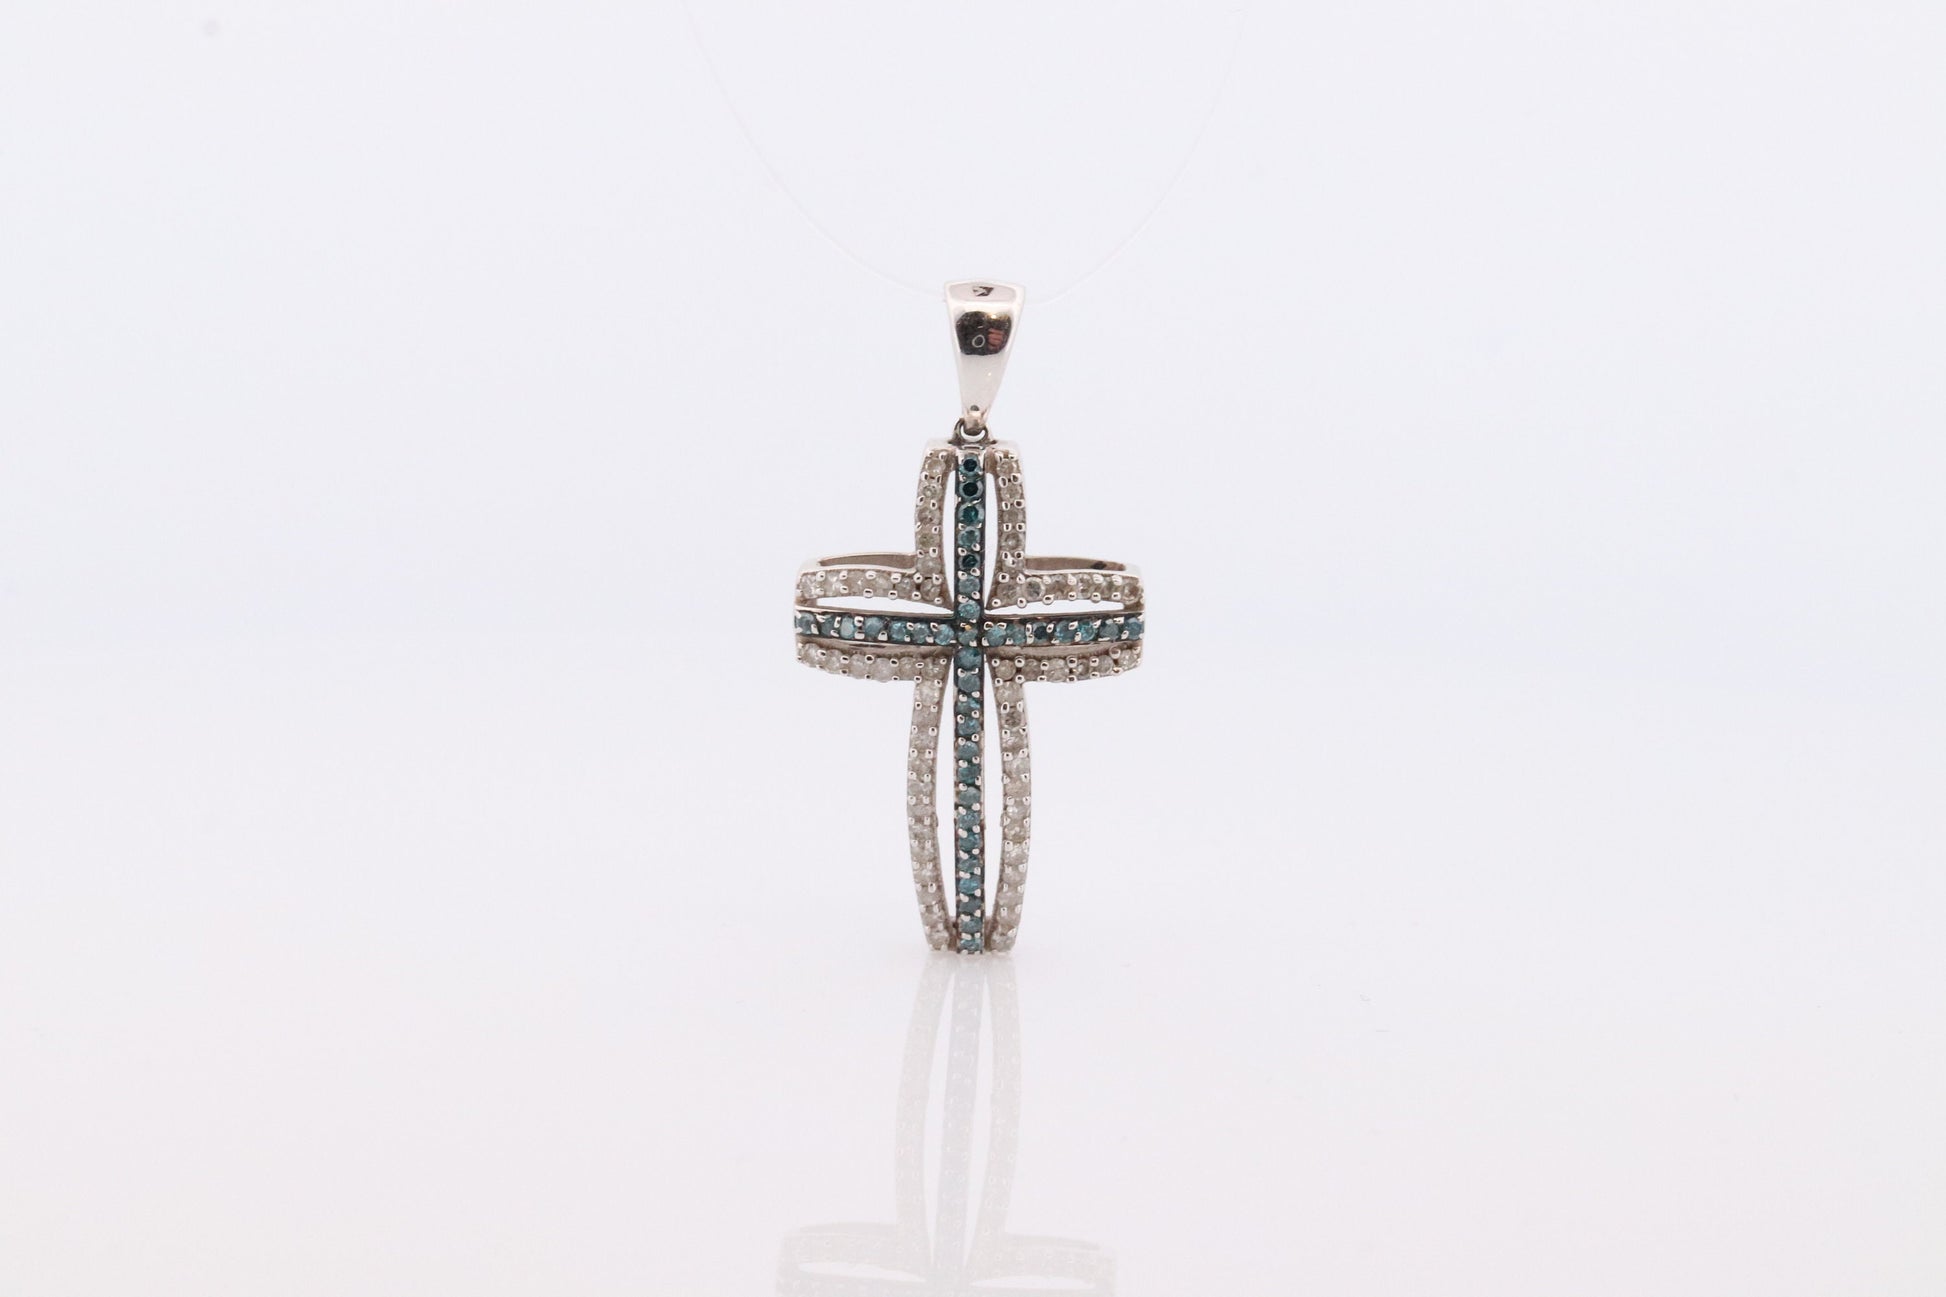 10k Gold Cross Crucifix with Diamonds. 10k Blue Diamond Cluster Pendant. Diamond Encrusted Crucifix.